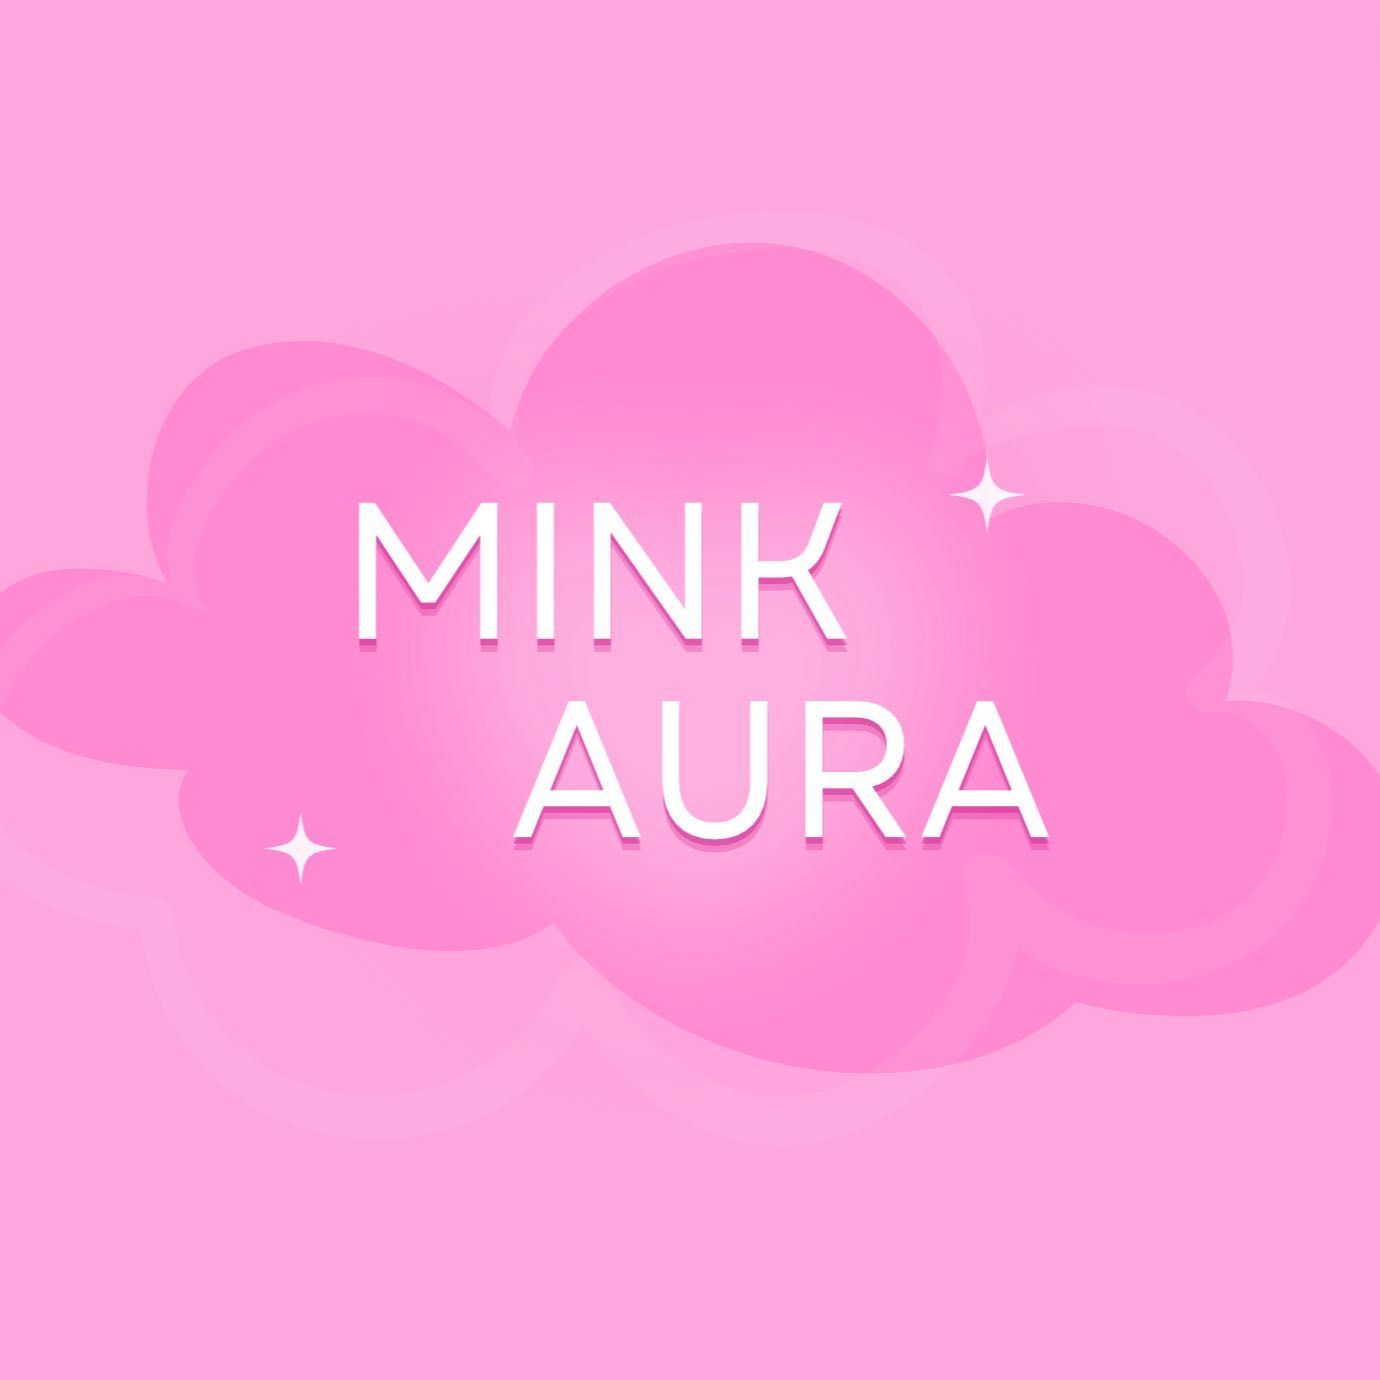 Mink aura, Longheath Gardens, CR0 7TZ, Croydon, Croydon